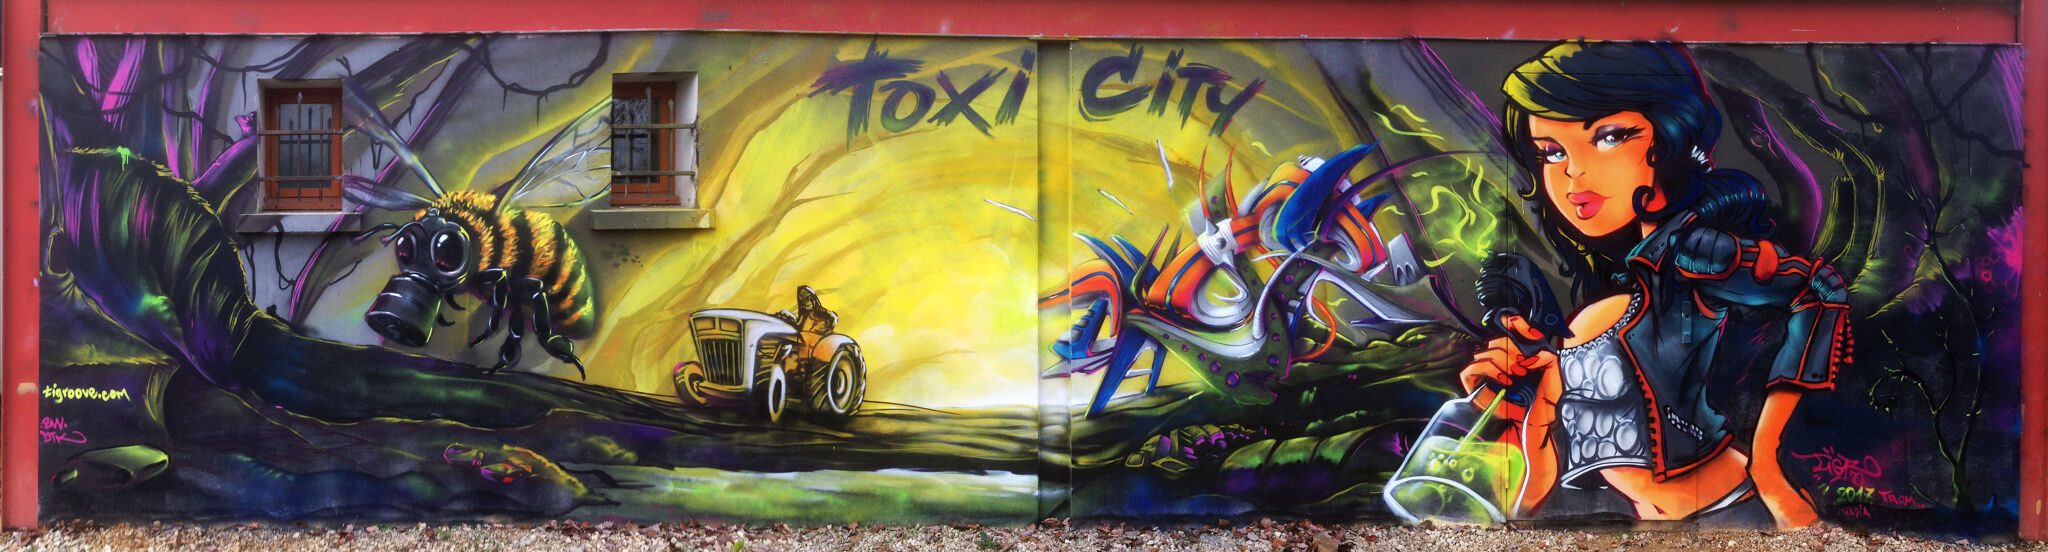 Tigre, Trom&mdash;Monsanto "Toxic city"